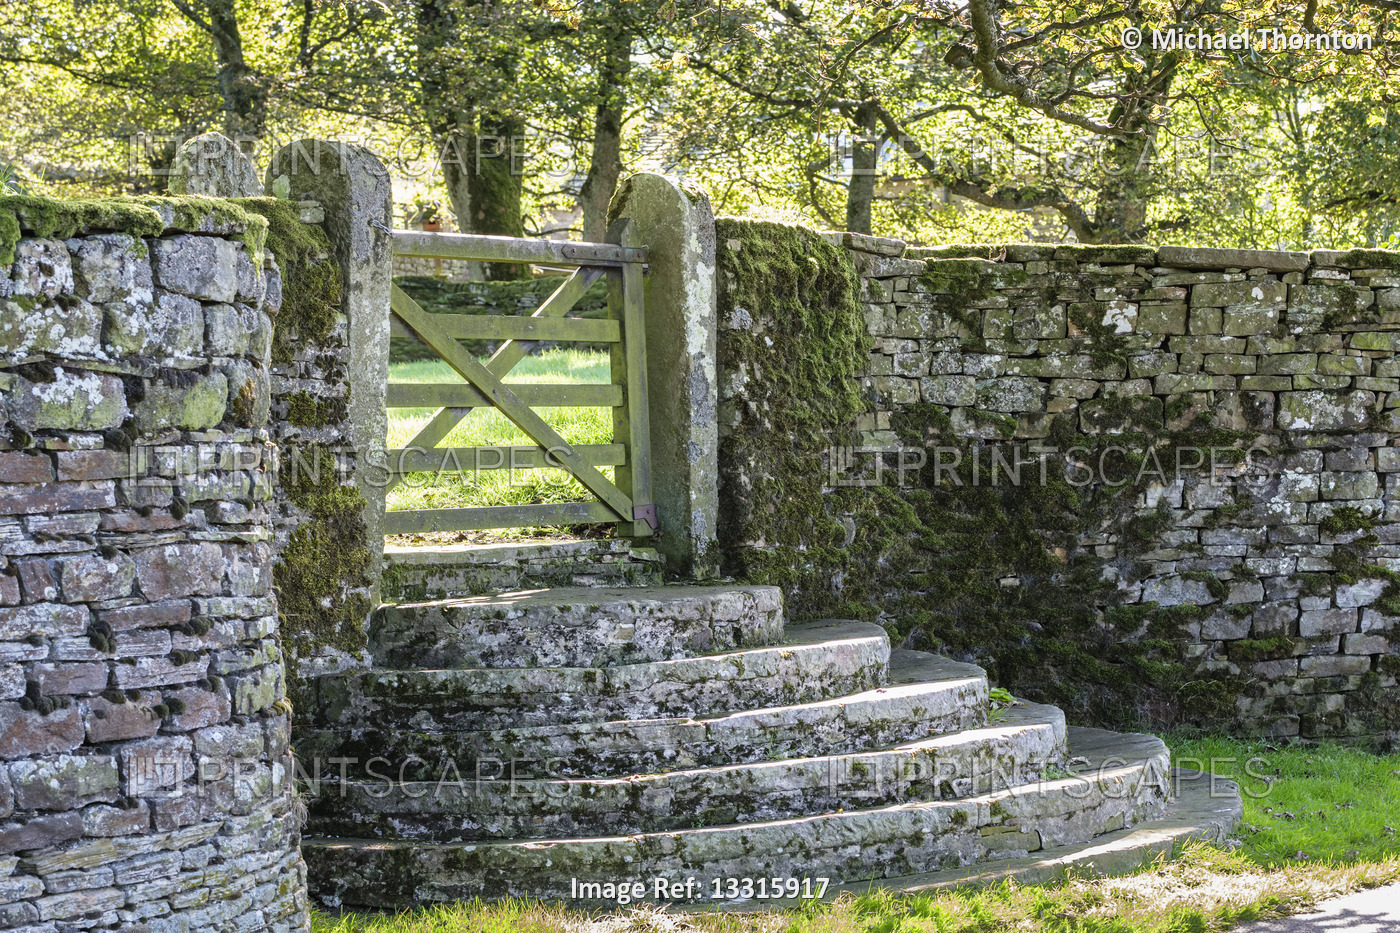 Carrshield, Hamlet in Northumberland, Semi Circular steps into Churchyard